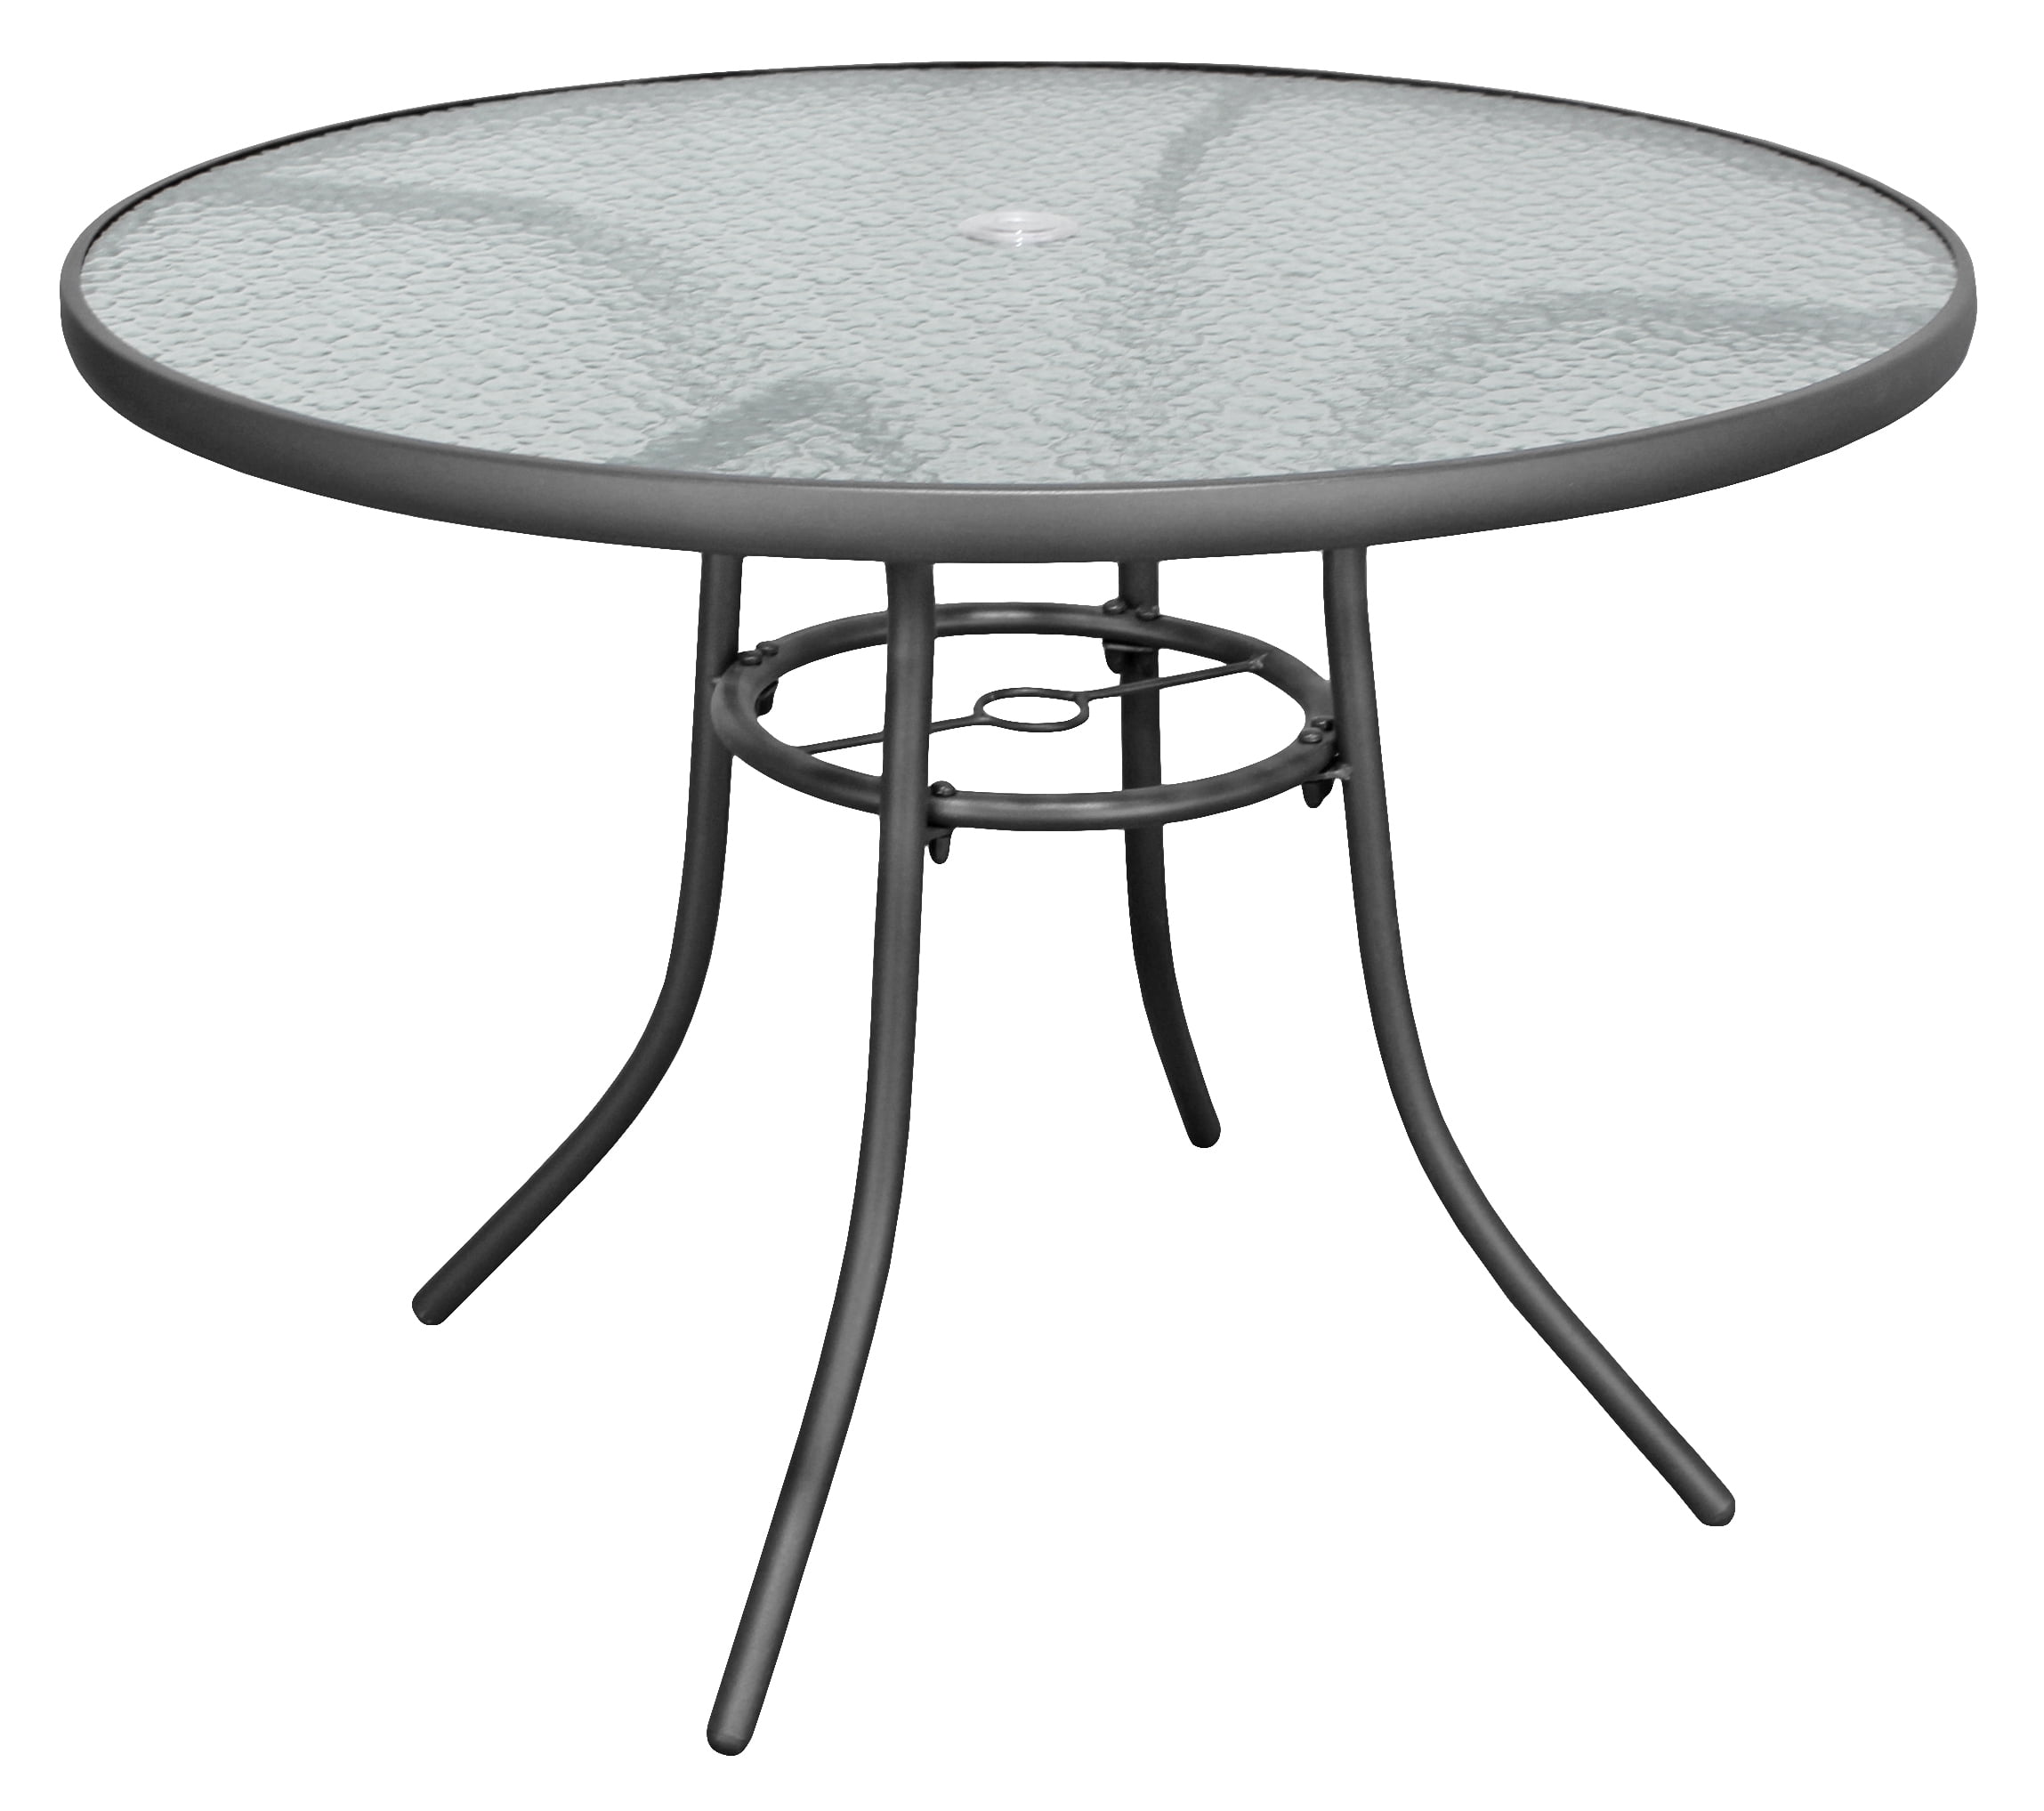 Garden Elements Sienna Metal Round, Grey Glass Top Garden Table And Chairs